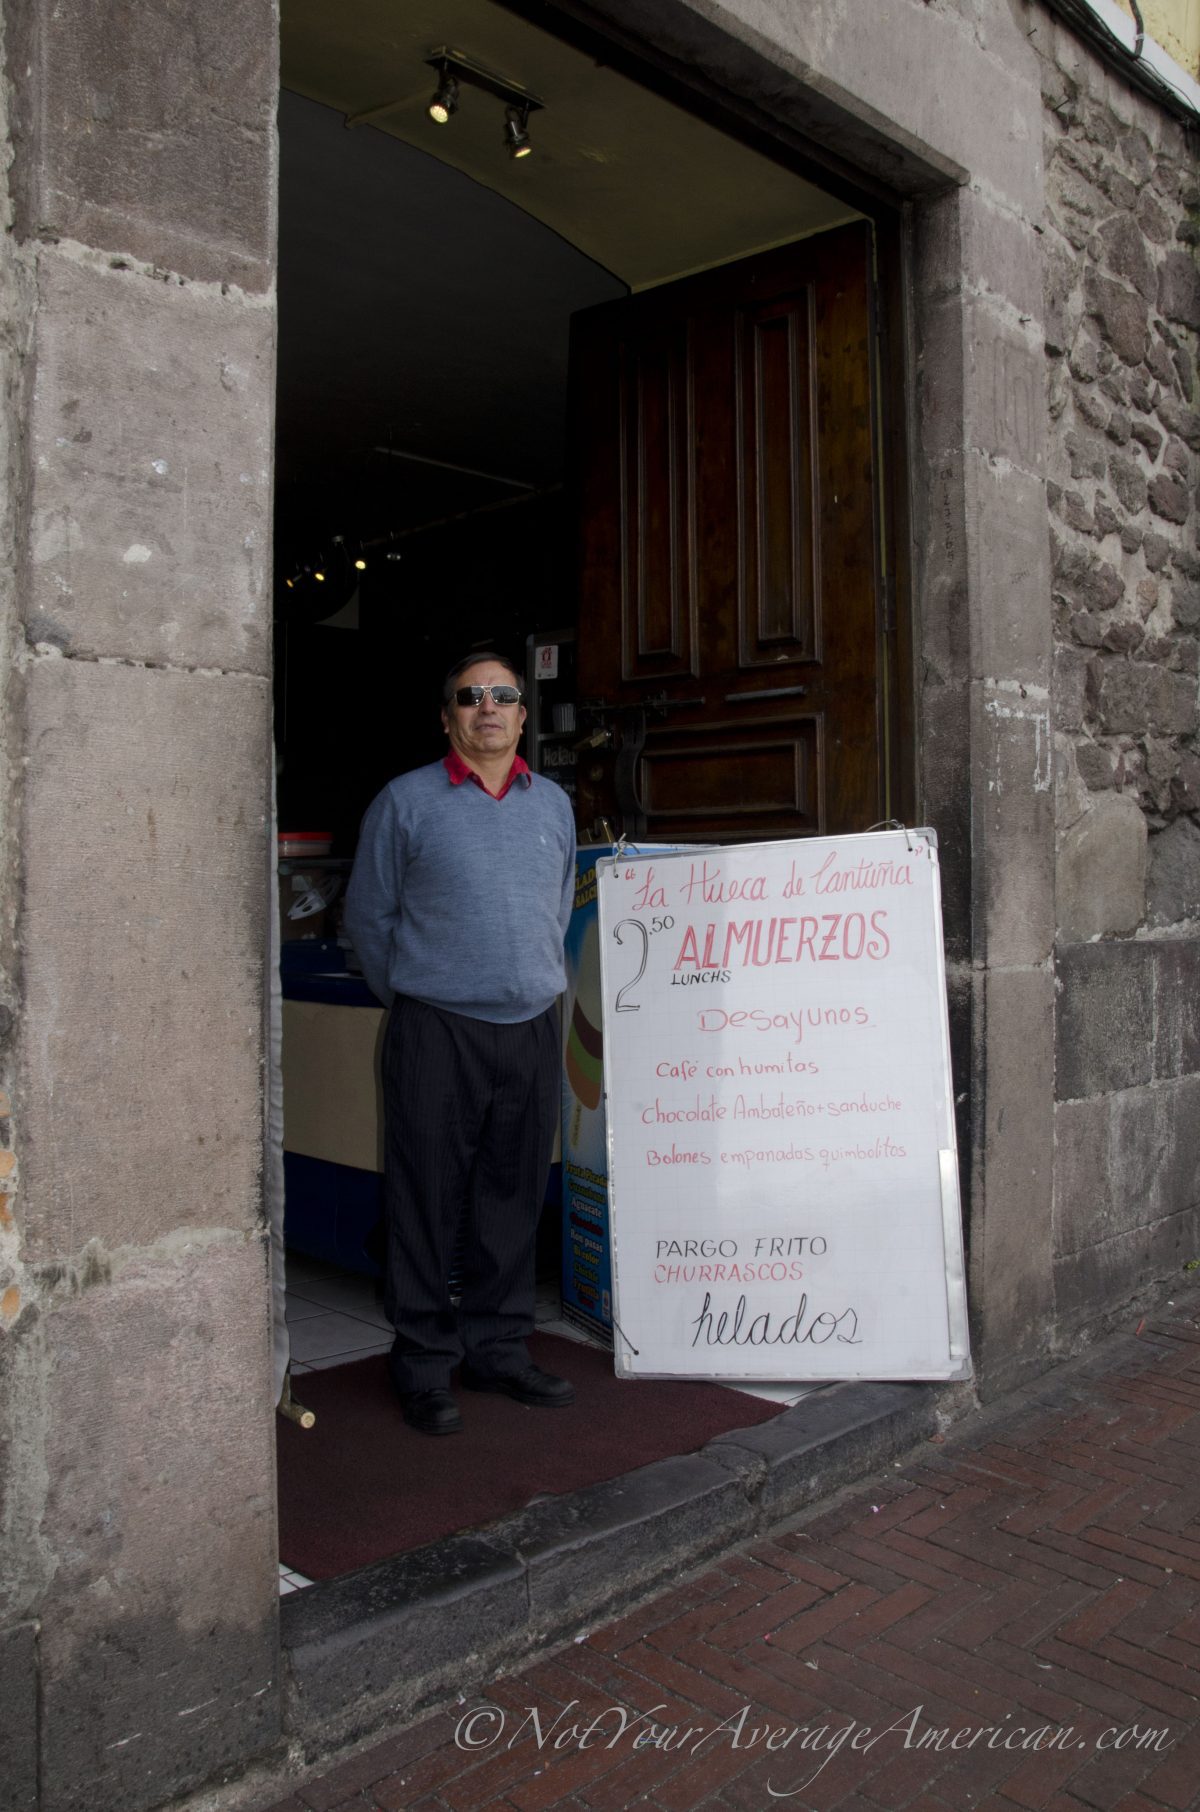 Owner and host of La Hueca de Cantuña - Marcelo Mendez | ©Angela Drake